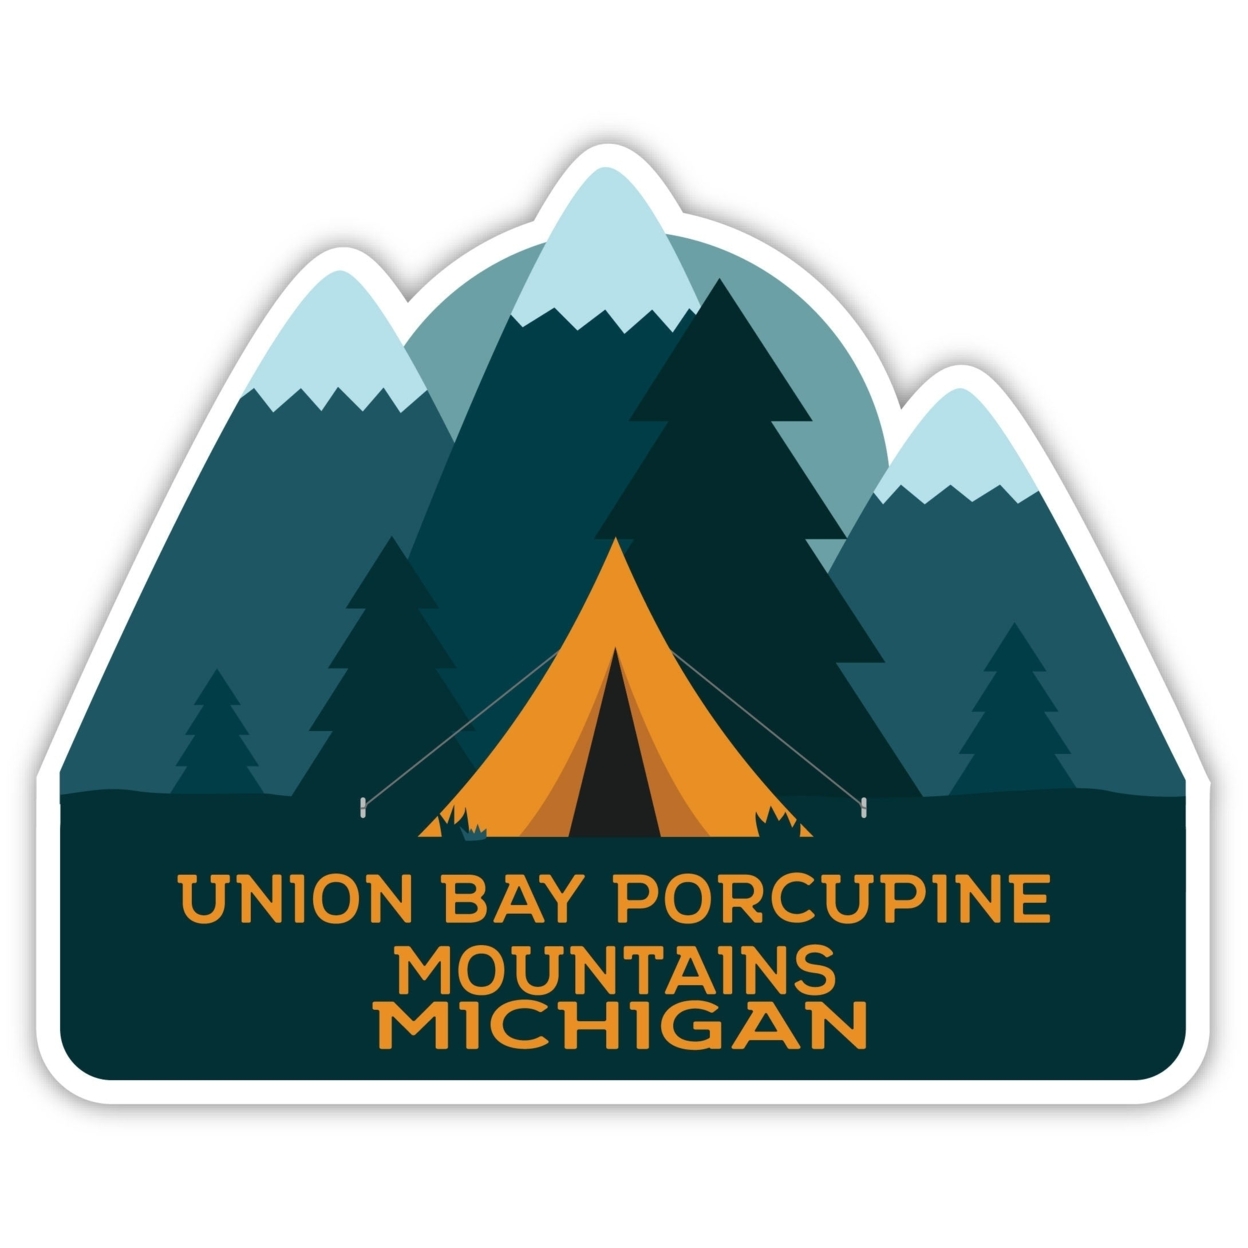 Union Bay Porcupine Mountains Michigan Souvenir Decorative Stickers (Choose Theme And Size) - Single Unit, 4-Inch, Tent